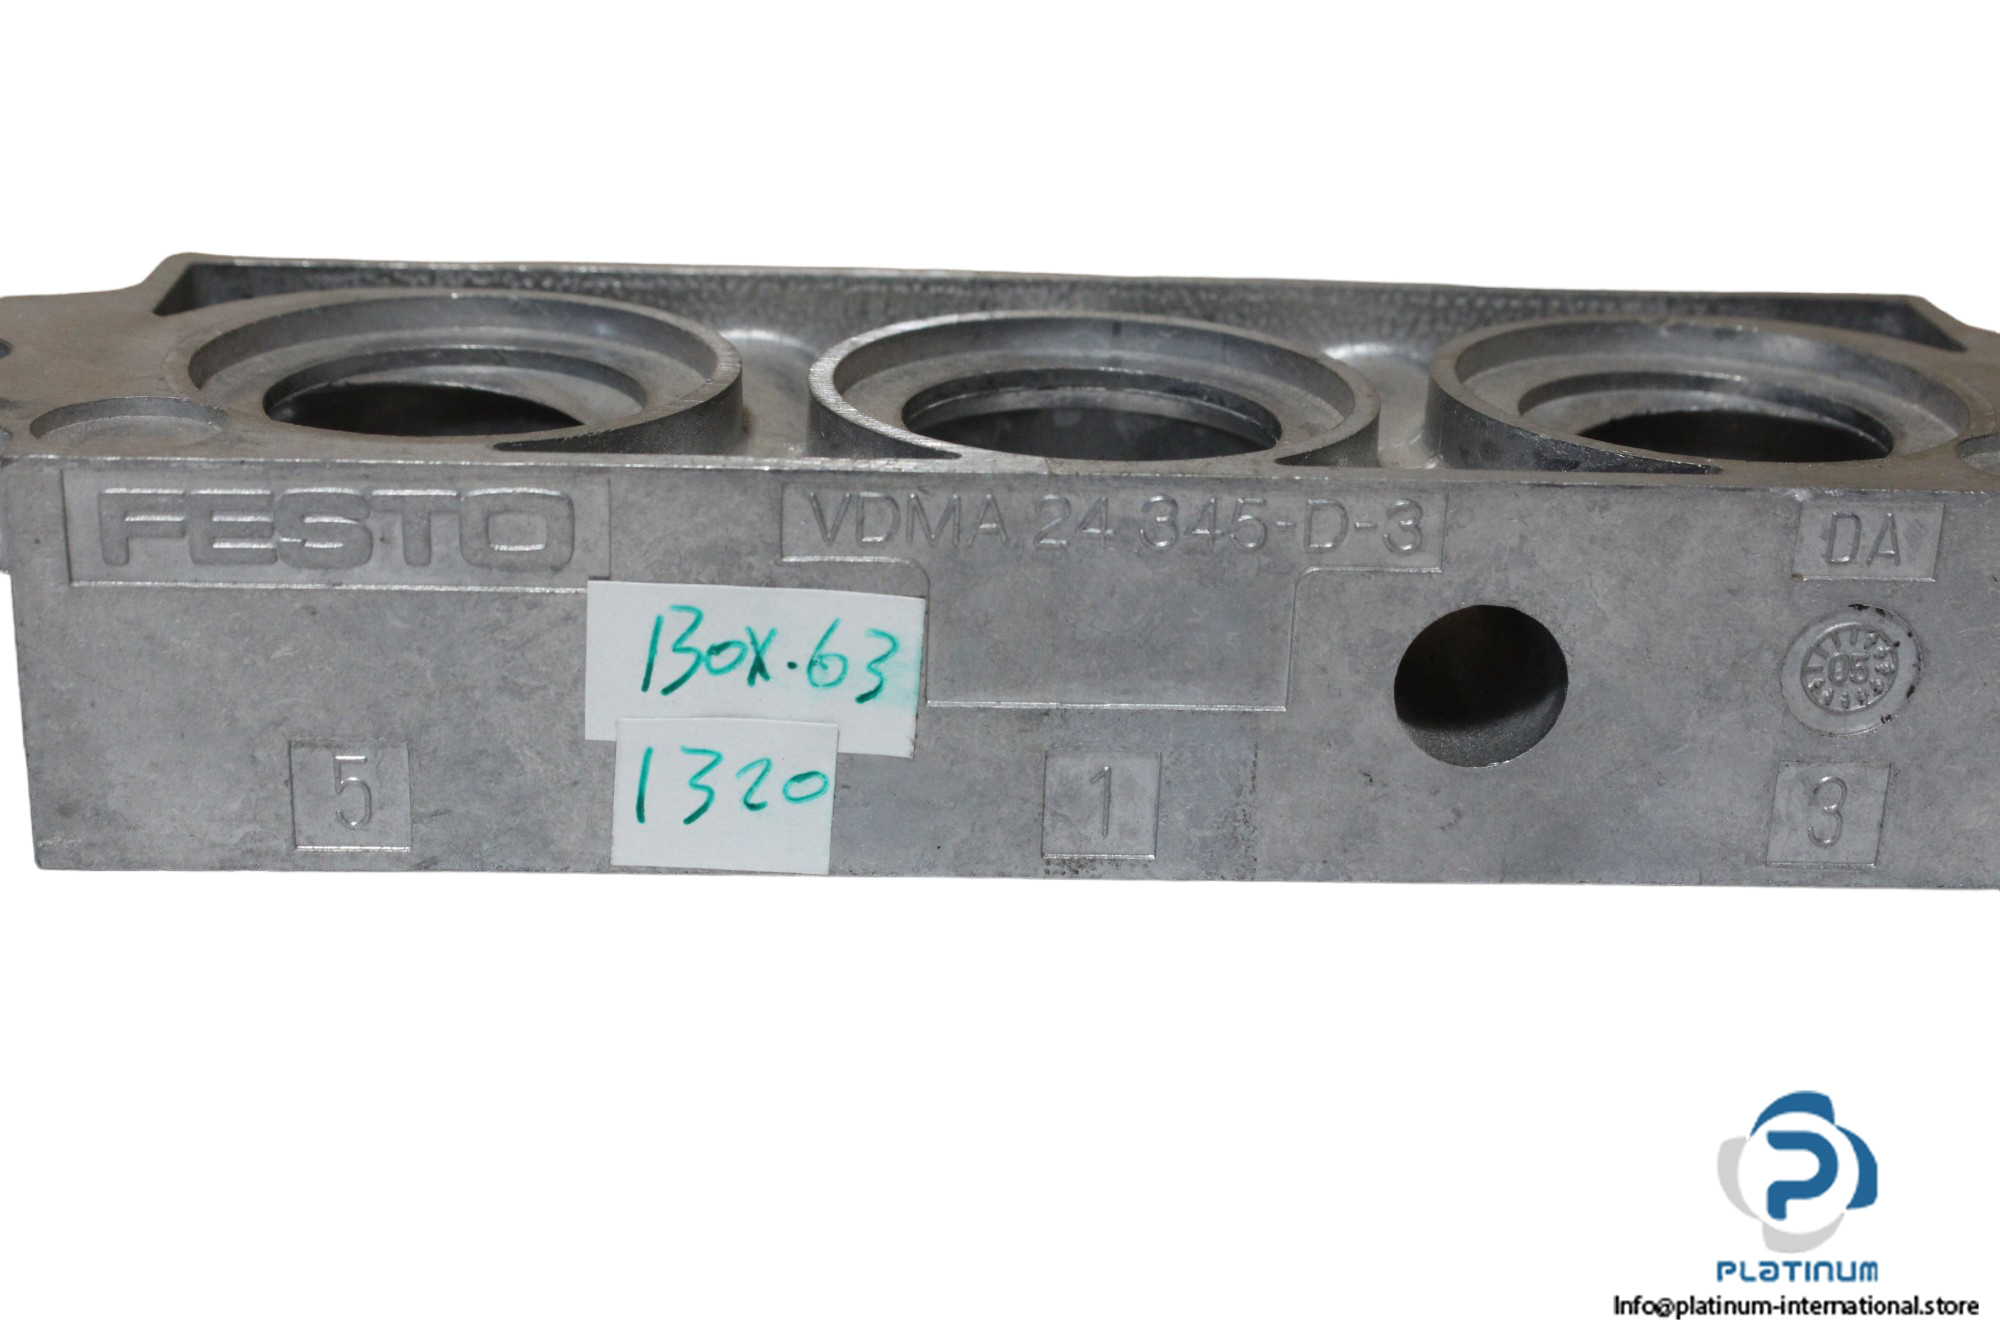 festo-VDMA24345-D-3-valve-base-used-2